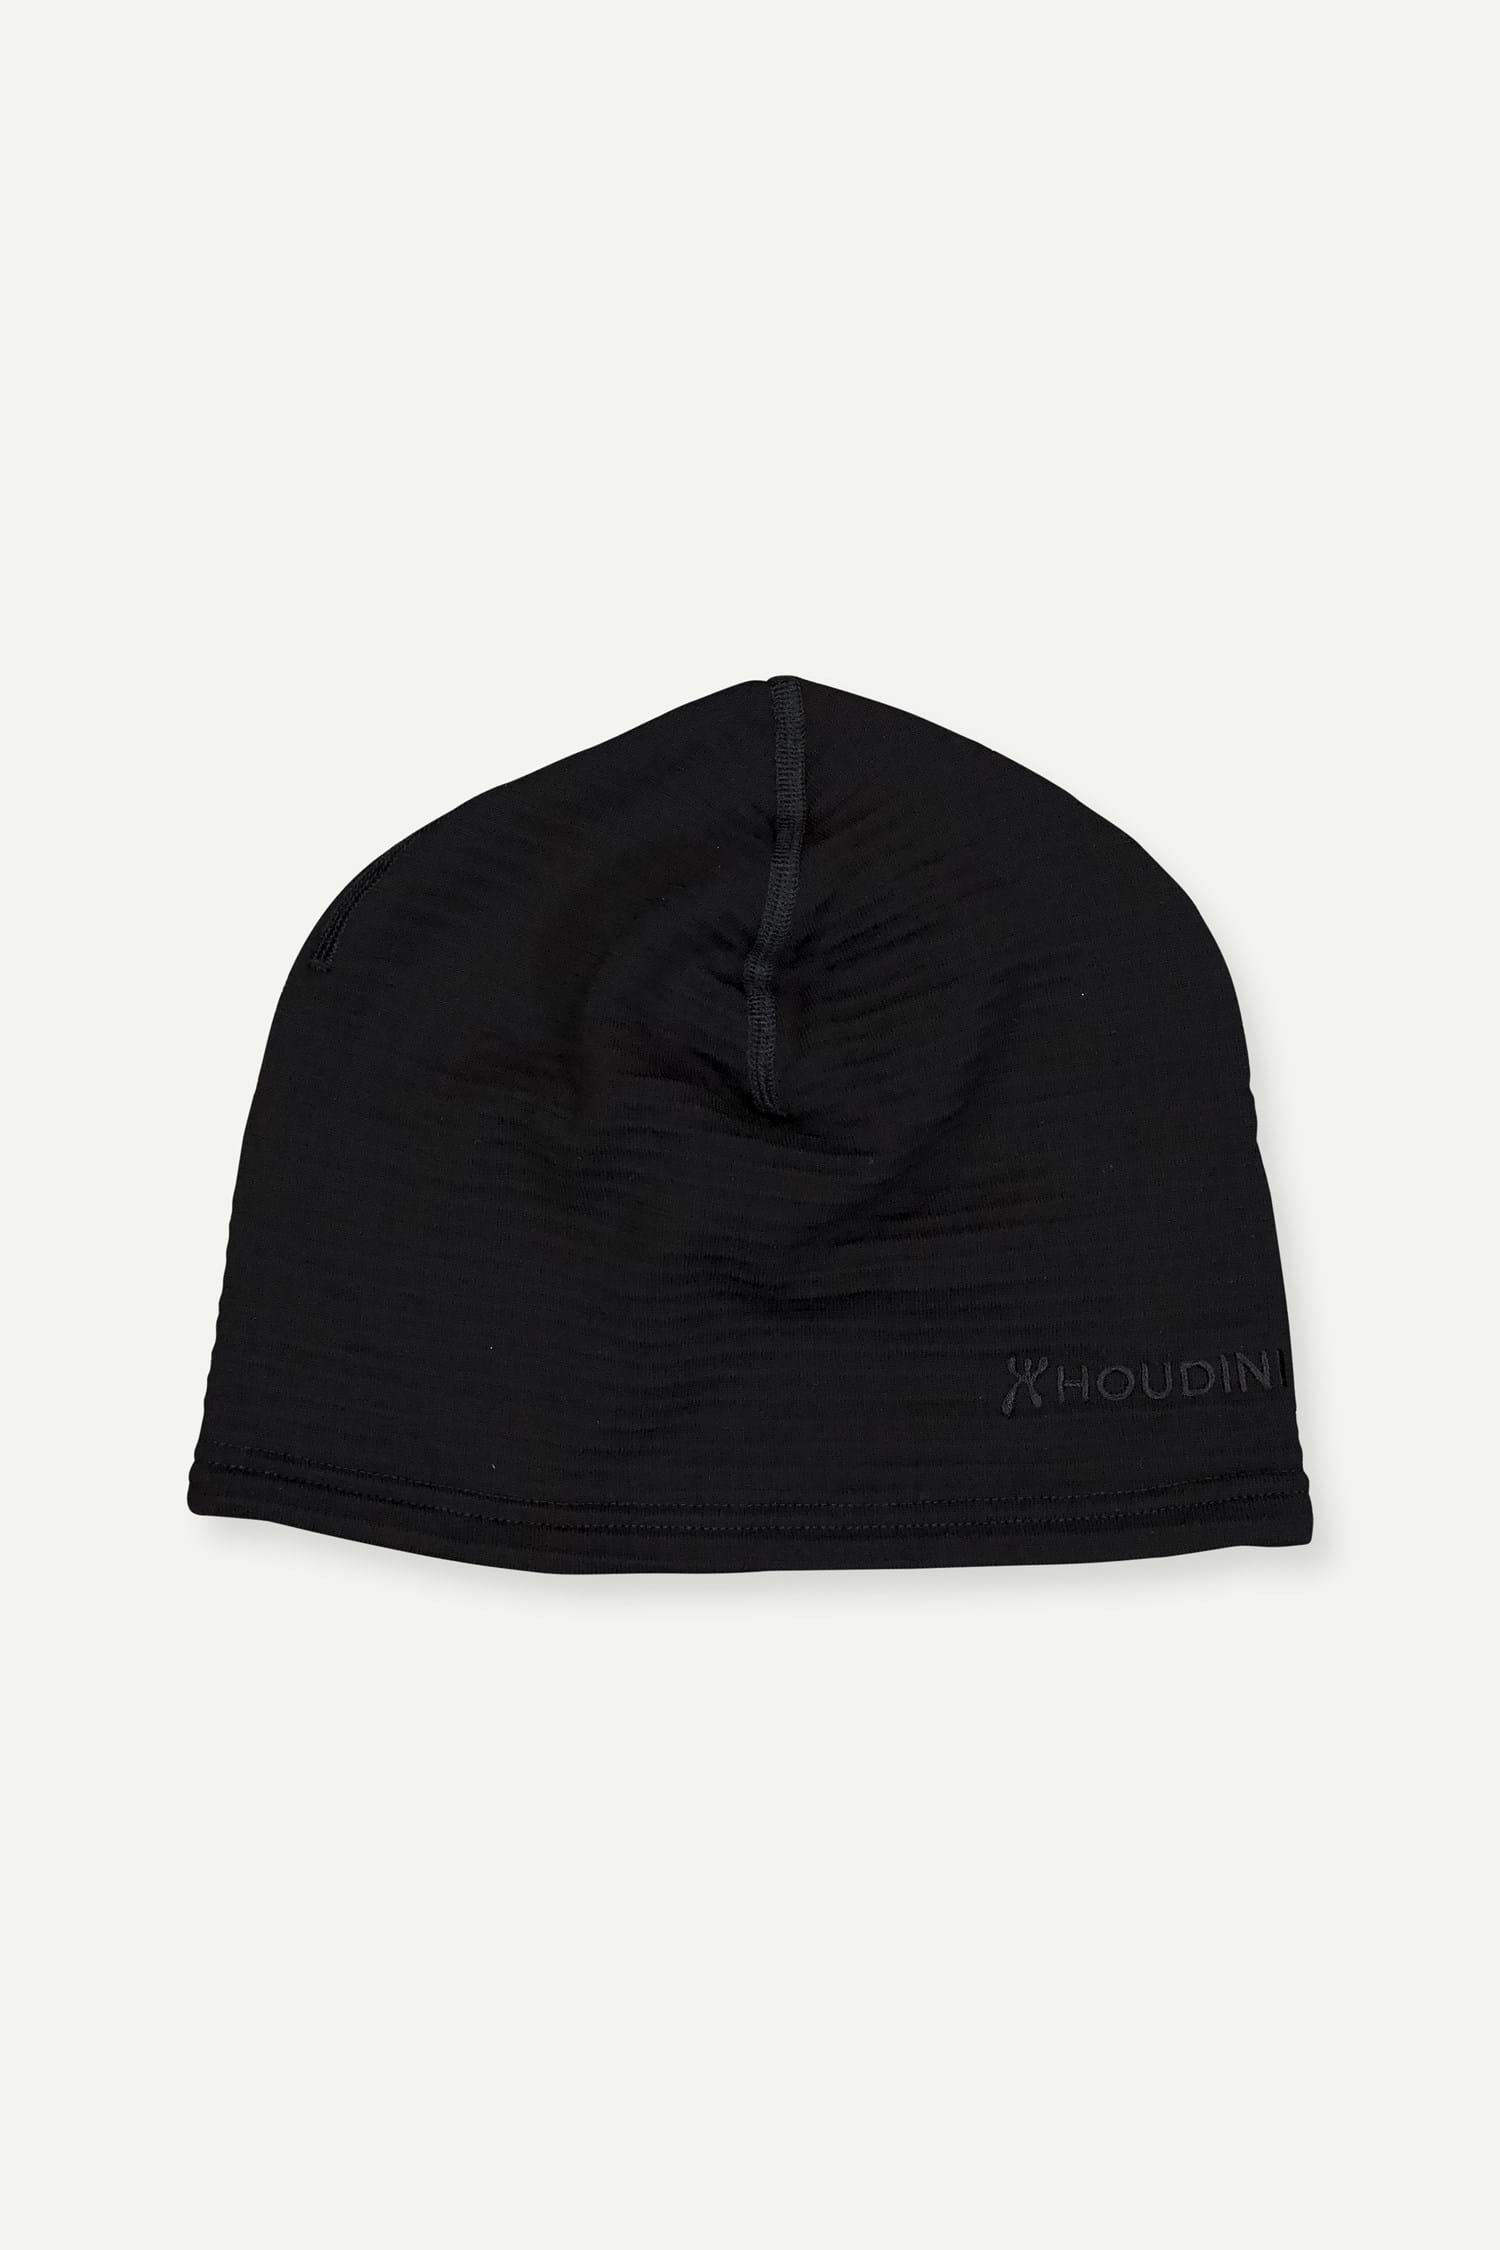 Image of Houdini Desoli Thermal Hat, True Black, S